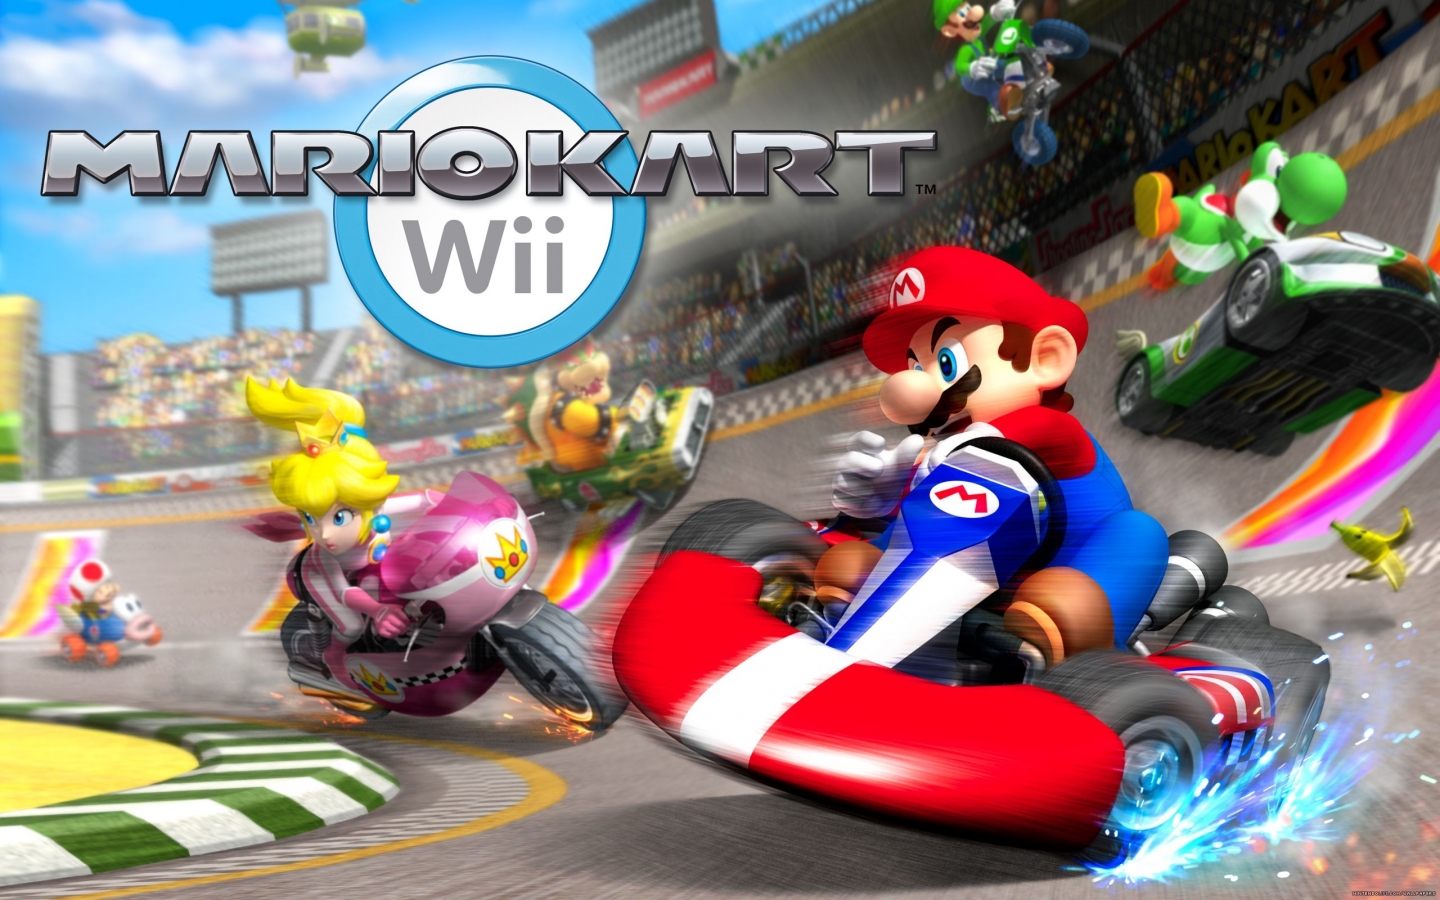 Mario Kart Wii for 1440 x 900 widescreen resolution